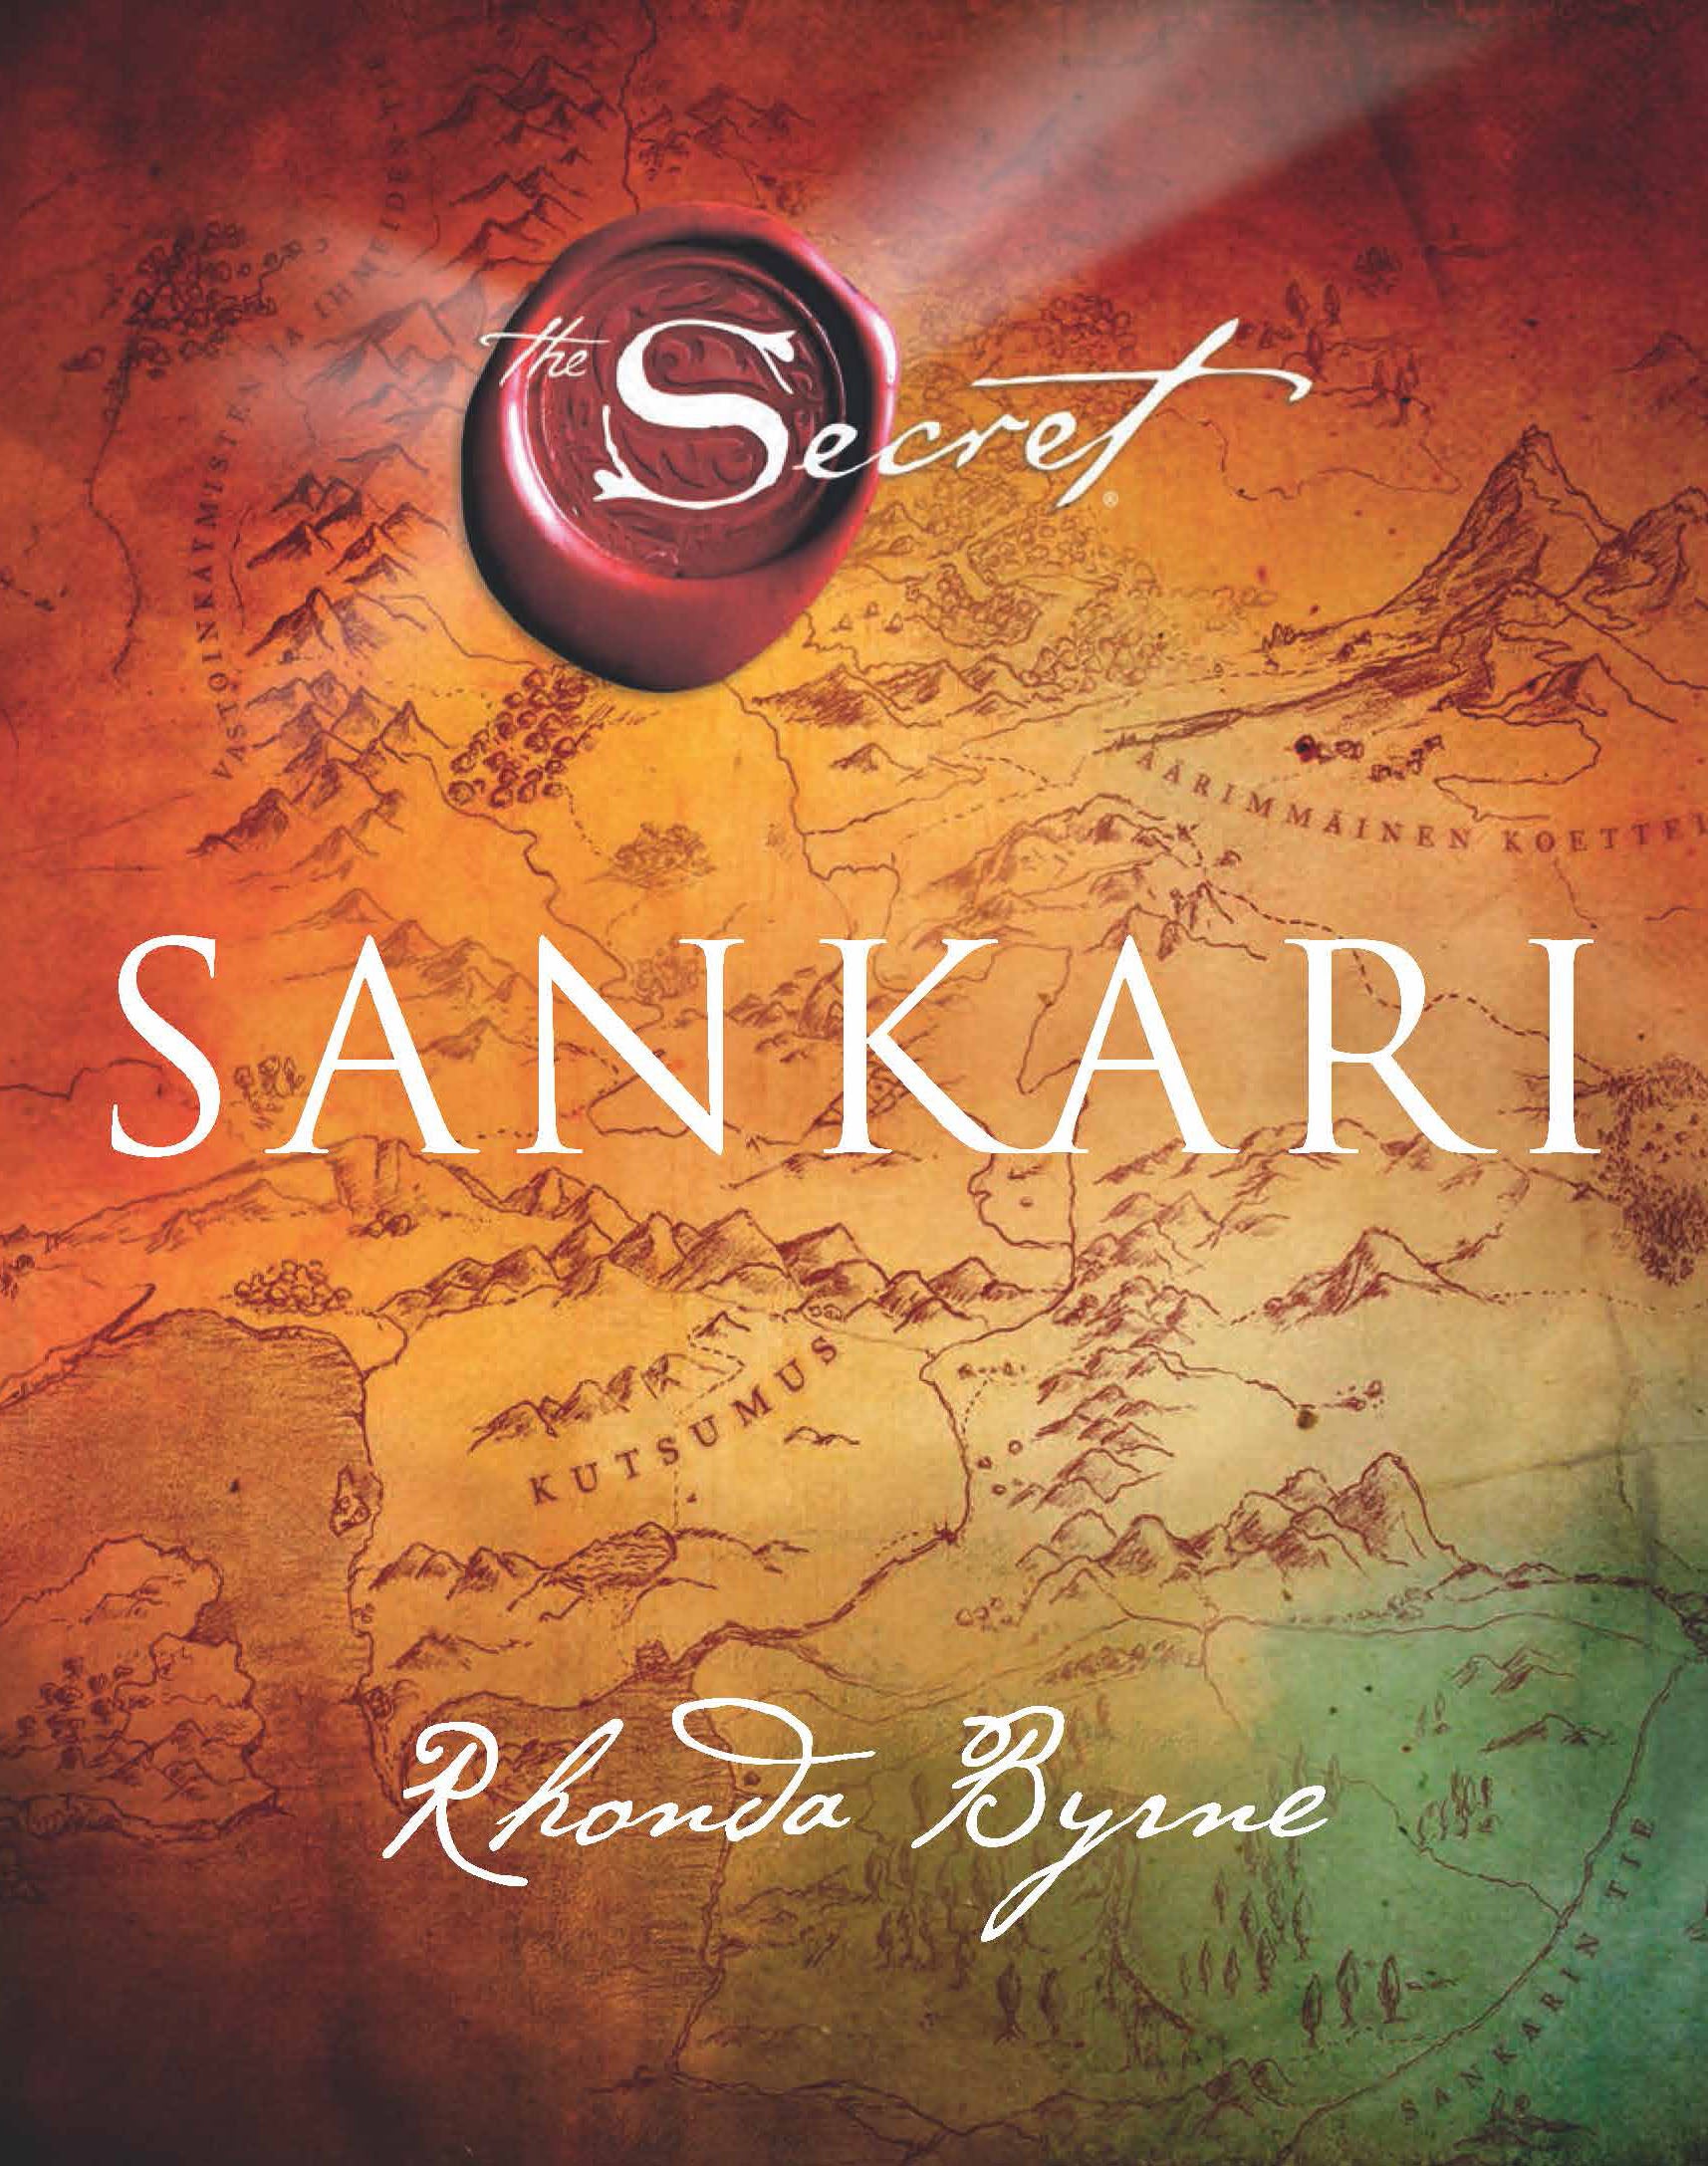 The Secret - Sankari